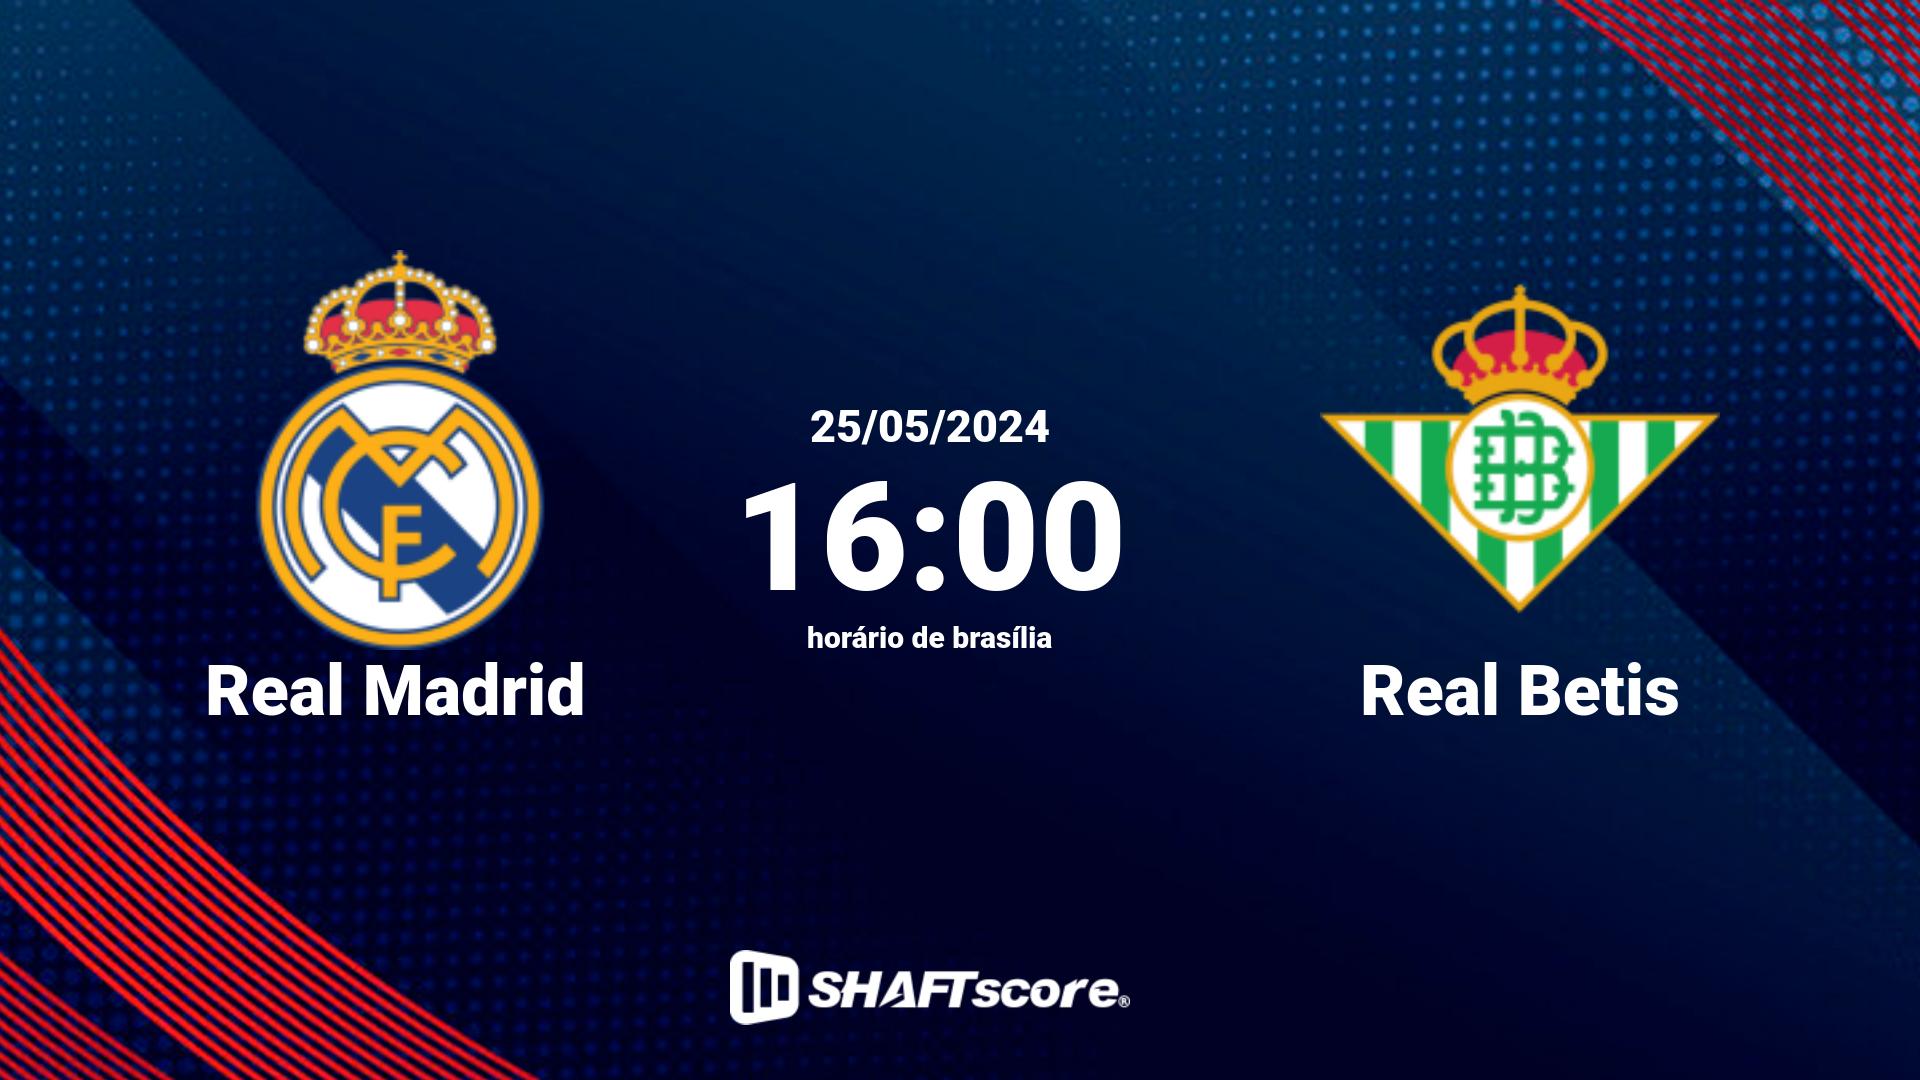 Estatísticas do jogo Real Madrid vs Real Betis 25.05 16:00